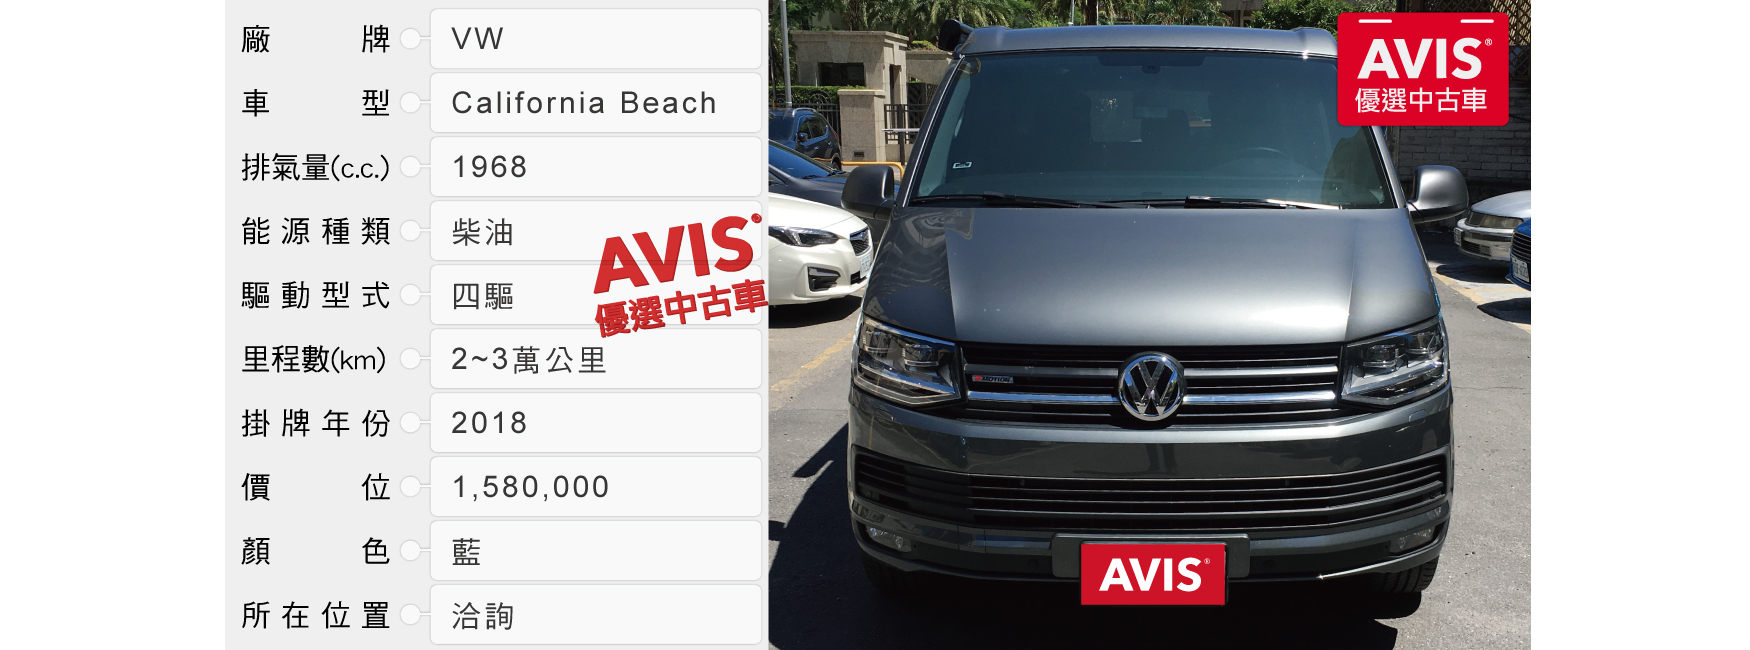 Vw California Beach Br 18 出廠 Br 預計3 月初開始販售 Avis安維斯租車